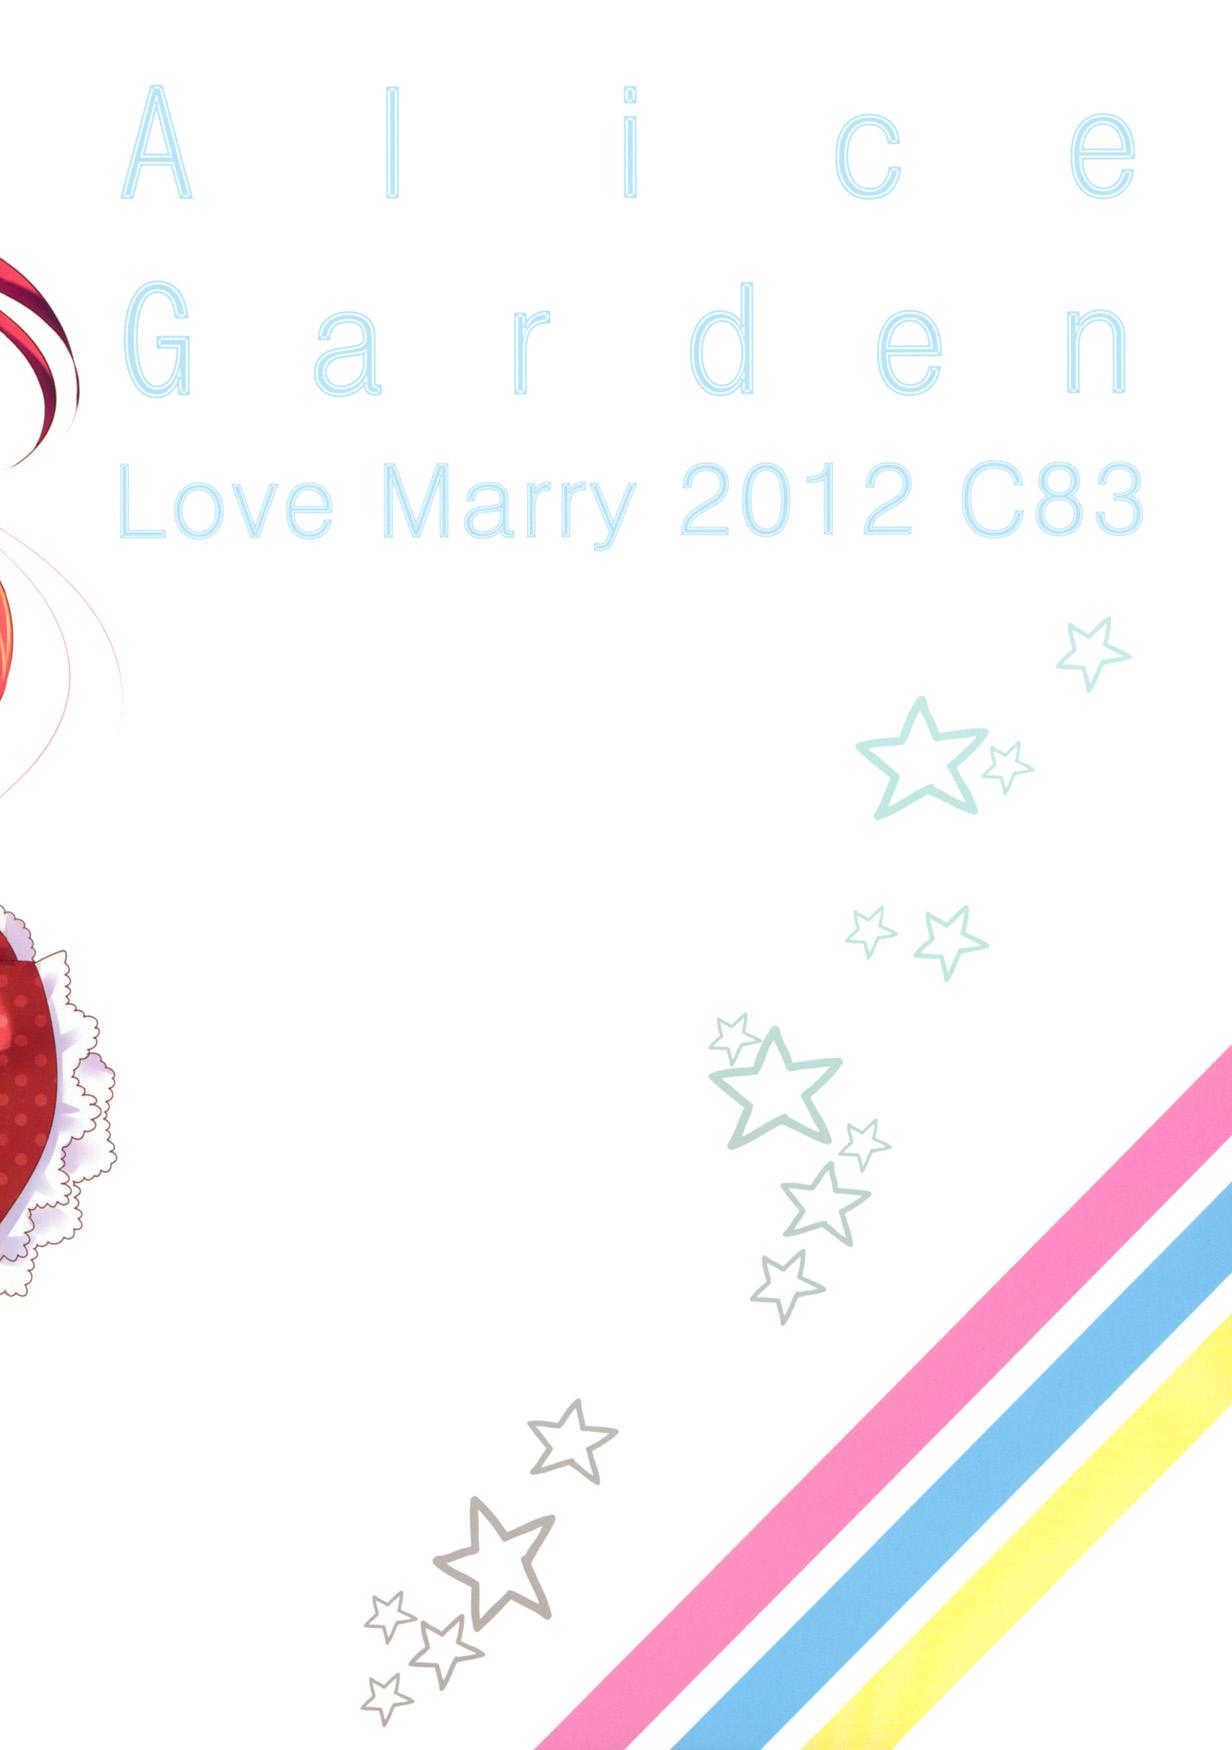 Love Marry 16